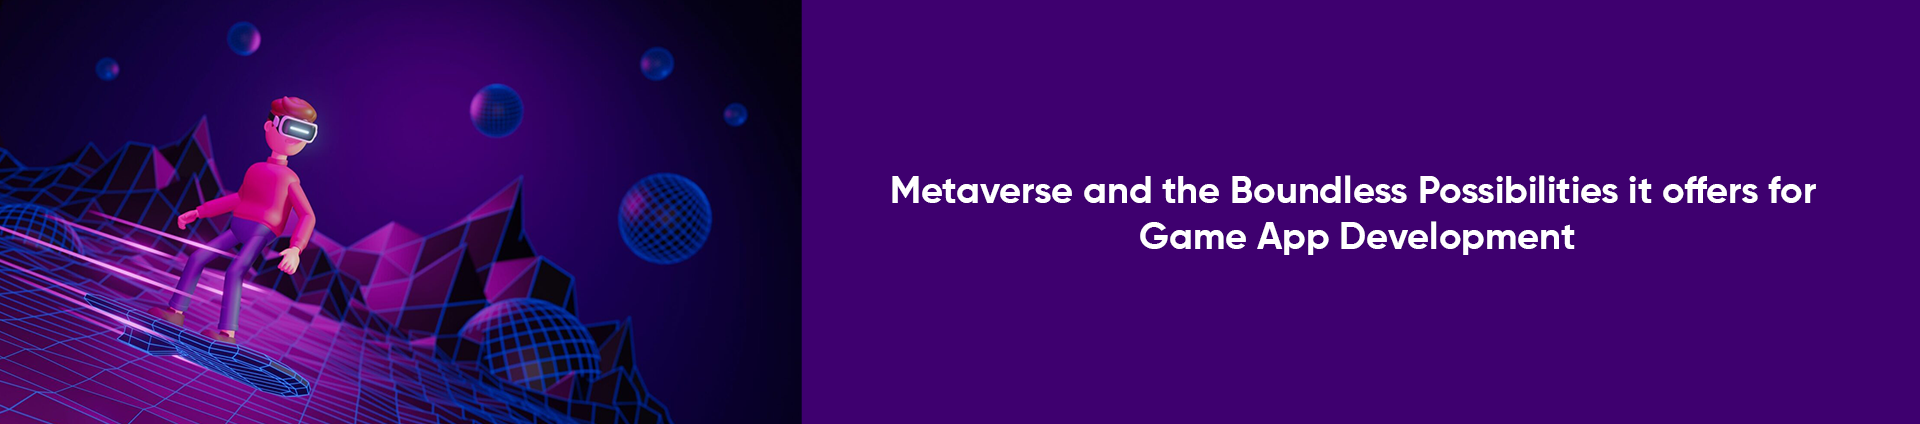 Metaverse offer for Game App Development